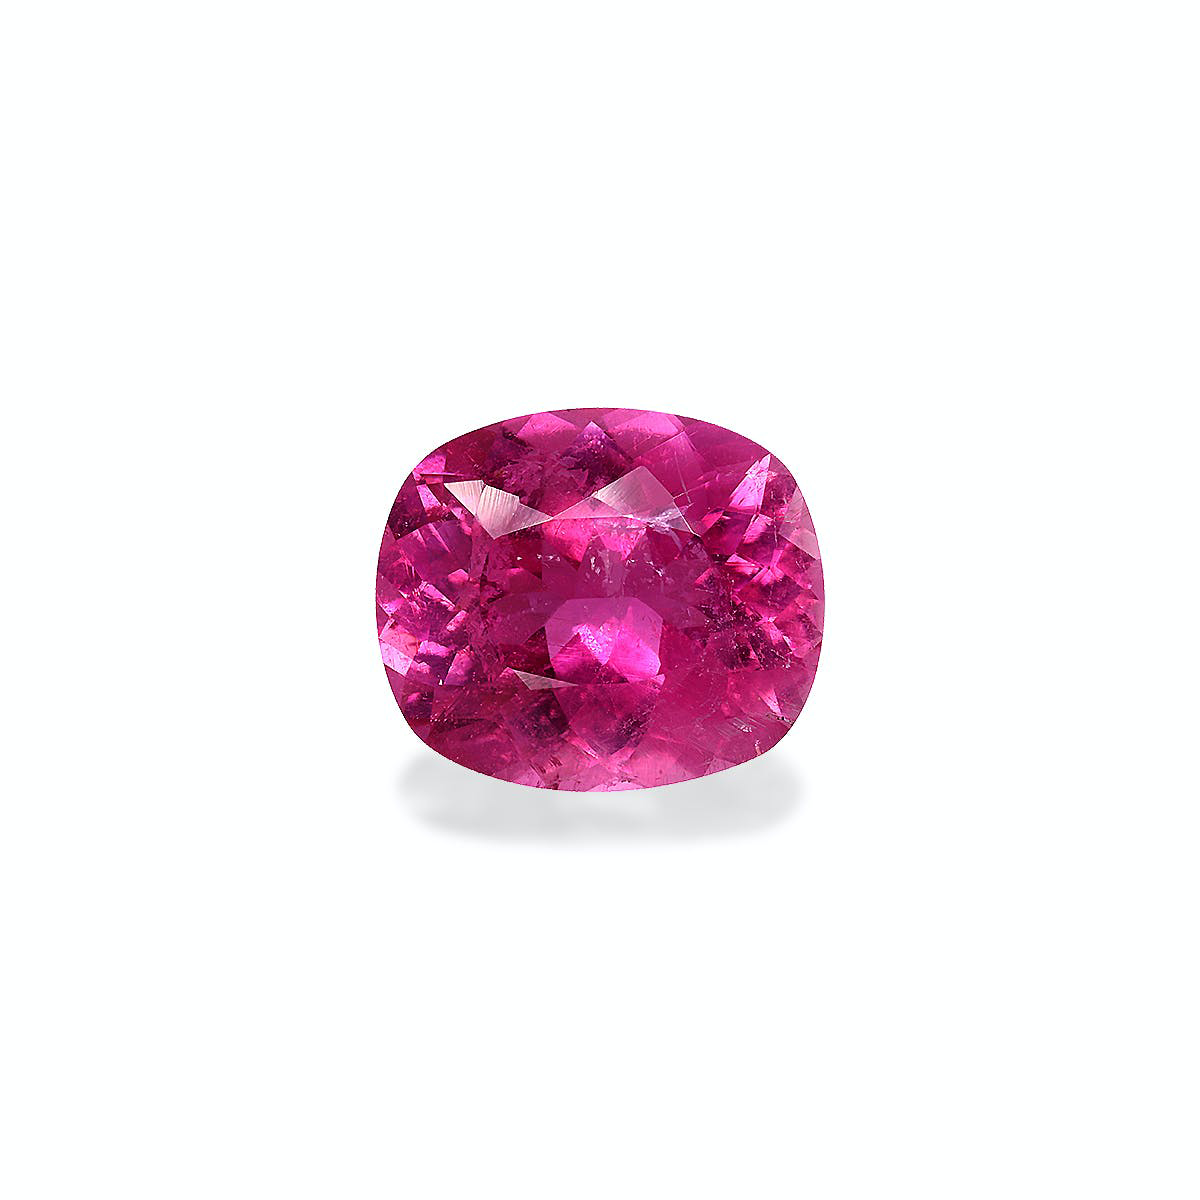 Picture of Fuscia Pink Rubellite Tourmaline 7.01ct - 14x12mm (RL0772)